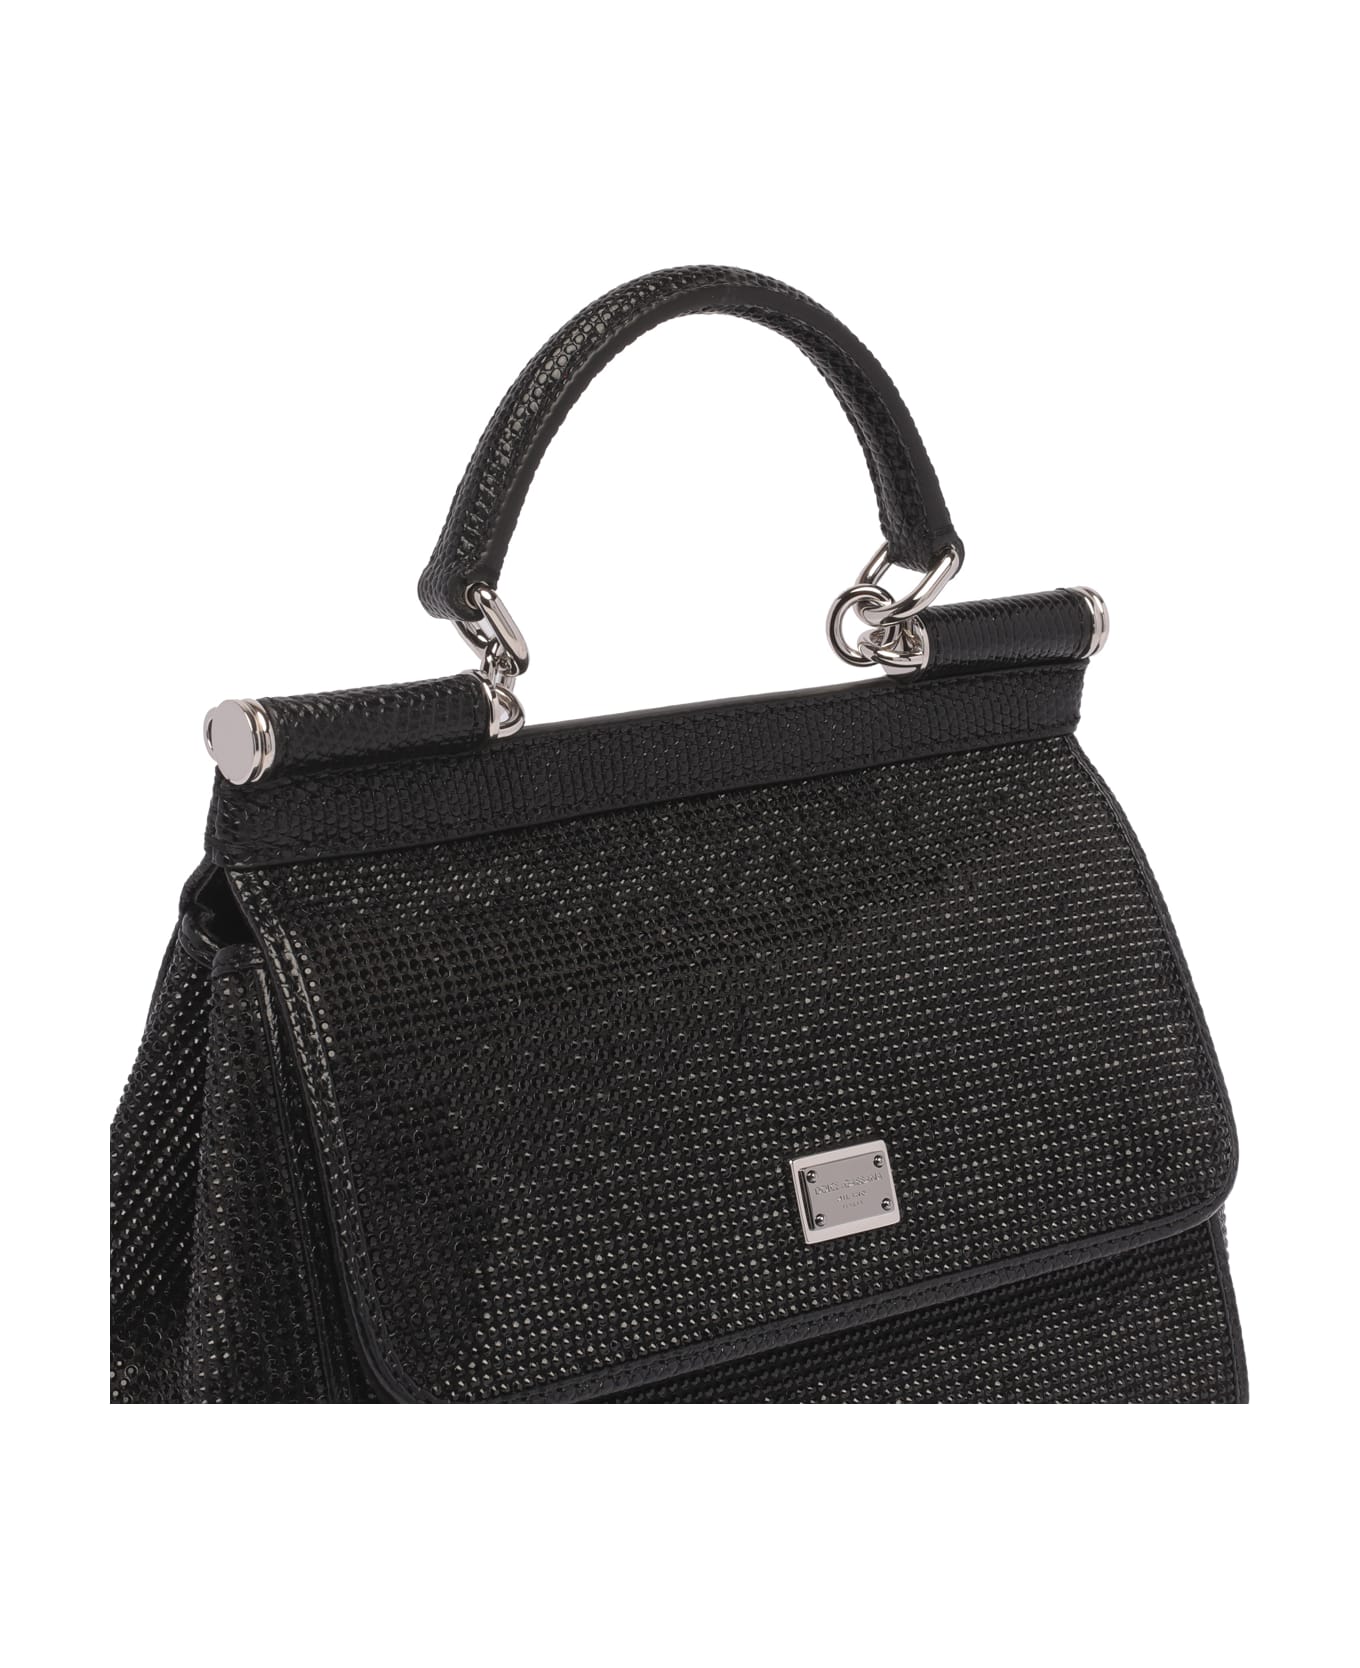 Dolce & Gabbana X Kim Sicily Small Bag - Black トートバッグ